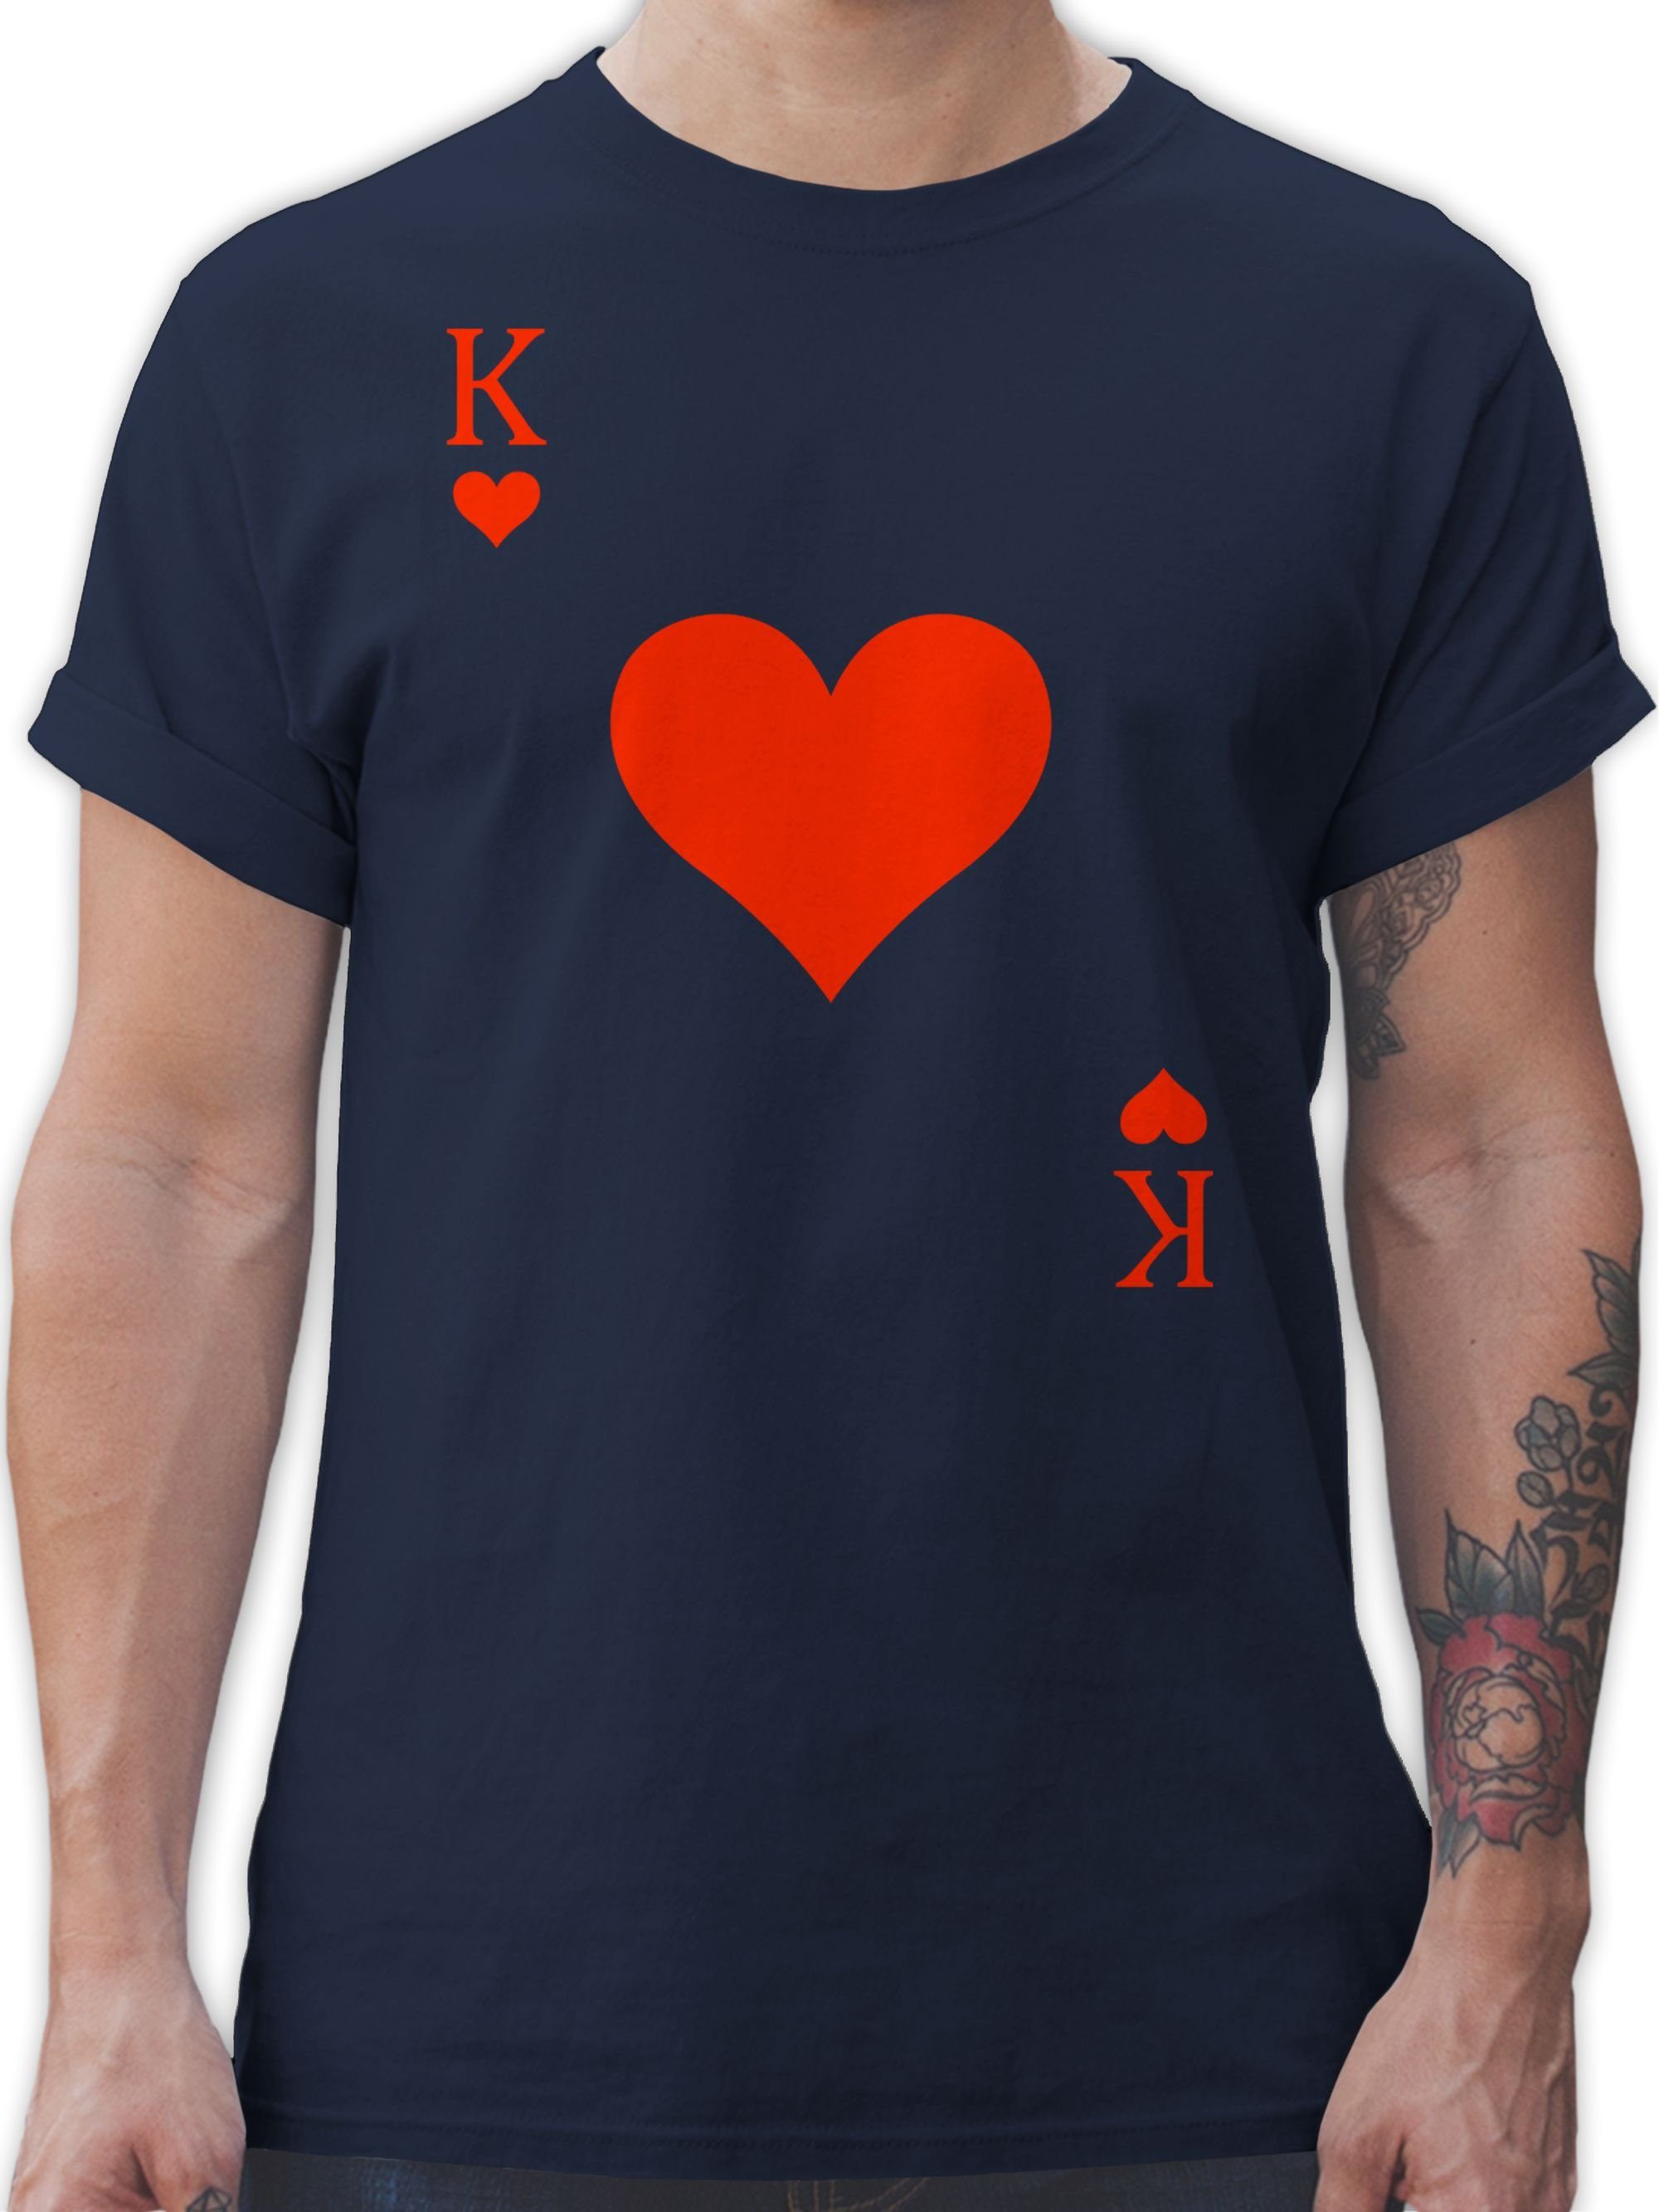 Shirtracer T-Shirt Herz König - King Queen Kartenspiel Karneval - Herzkönig Spielkarte He Karneval & Fasching 3 Navy Blau